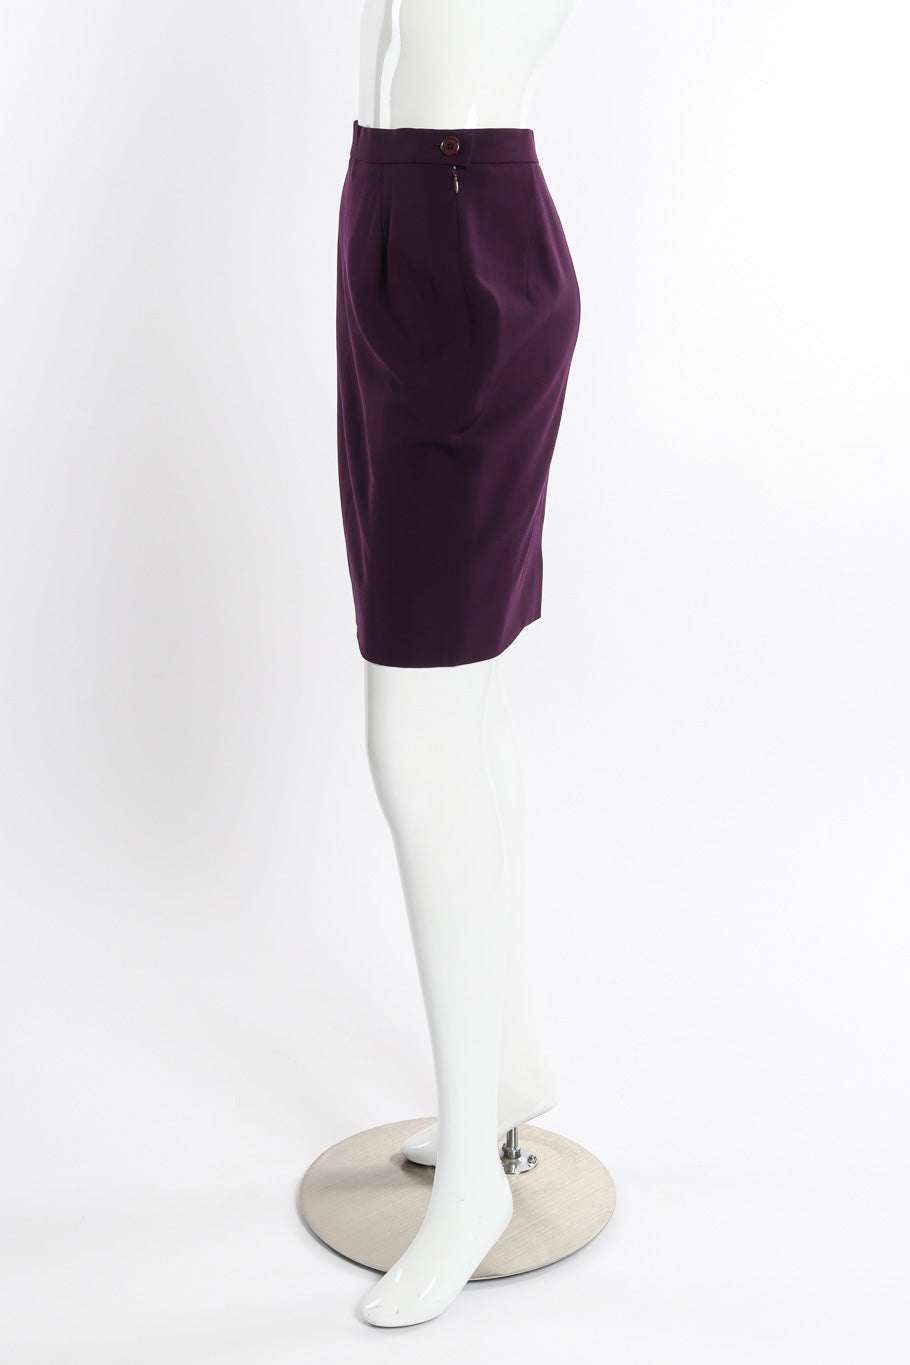 Vintage Hermés Asymmetrical Blazer and Skirt Set skirt side view on mannequin @recessla